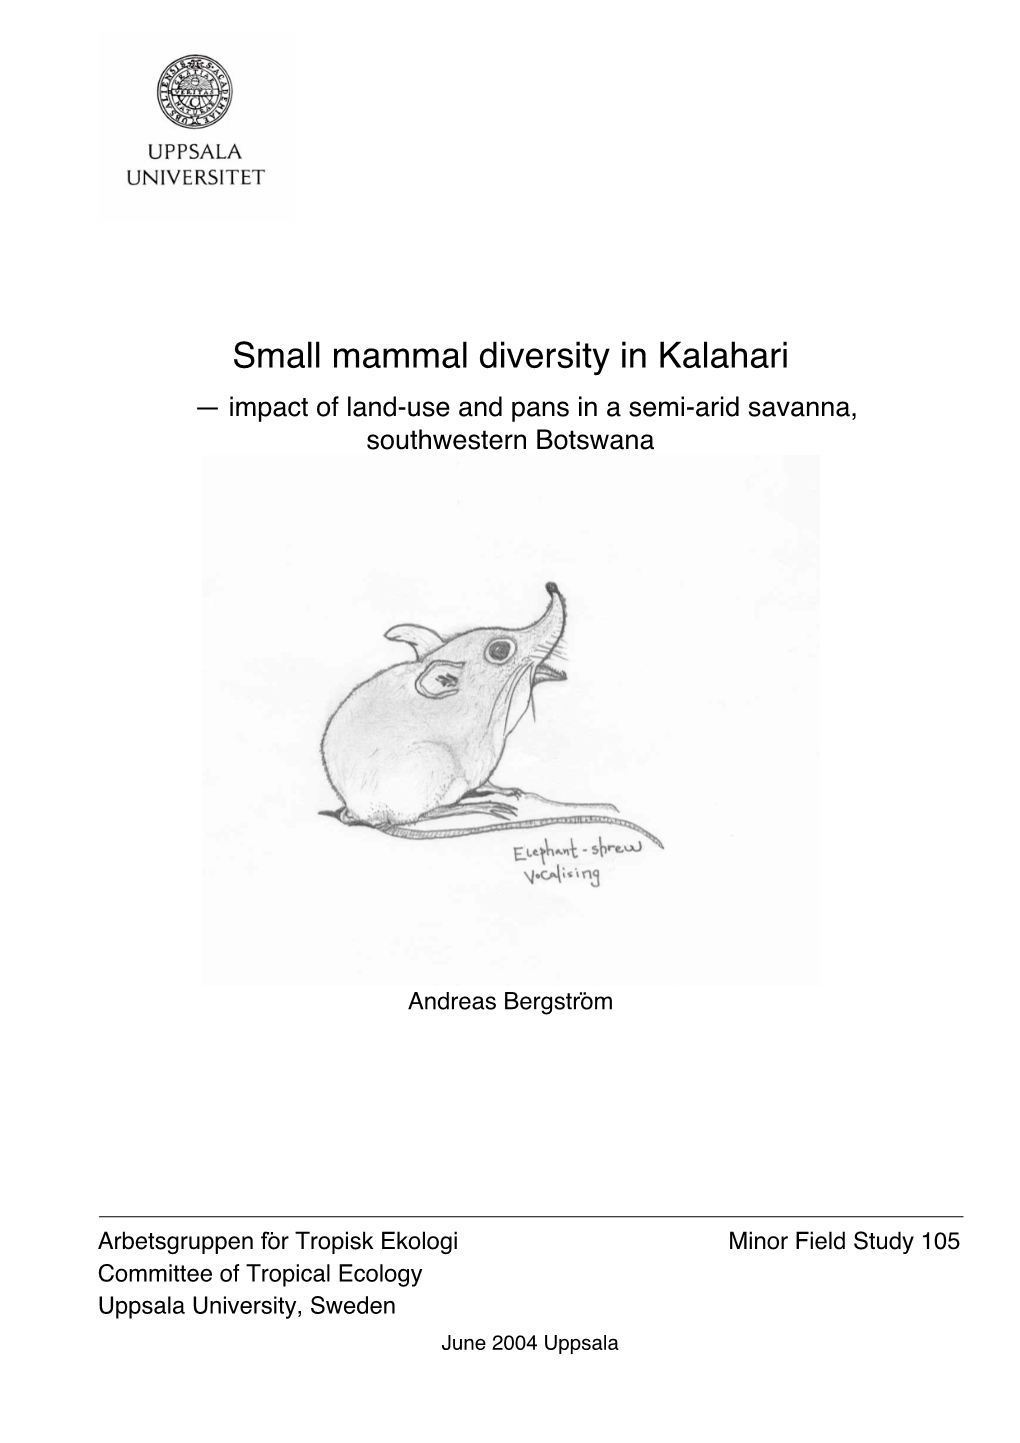 Small Mammal Diversity in Kalahari — Impact of Land-Use and Pans in a Semi-Arid Savanna, Southwestern Botswana